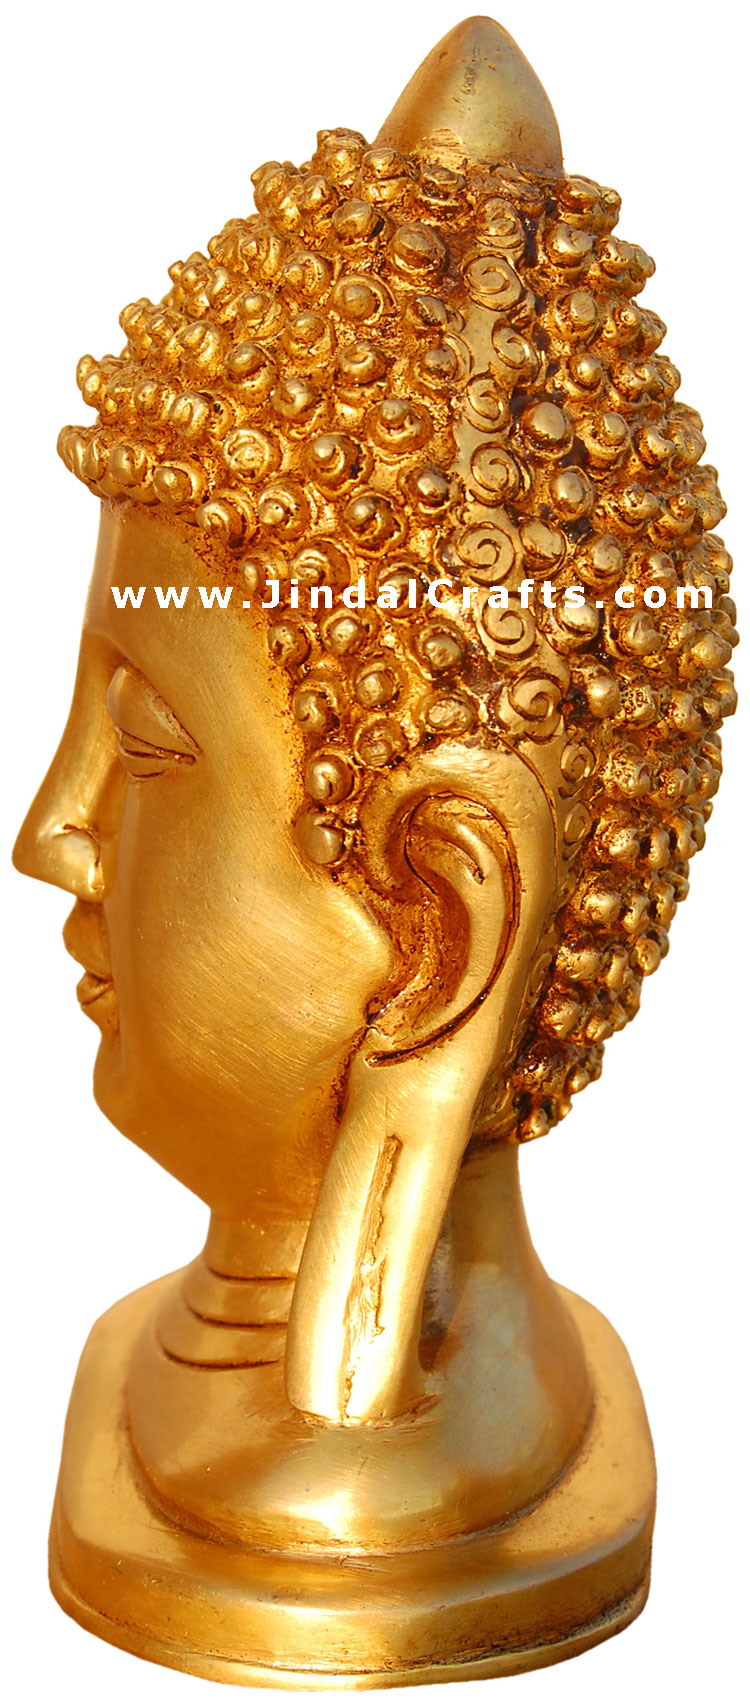 Peaceful Buddha - Brass made Buddhist Art from India